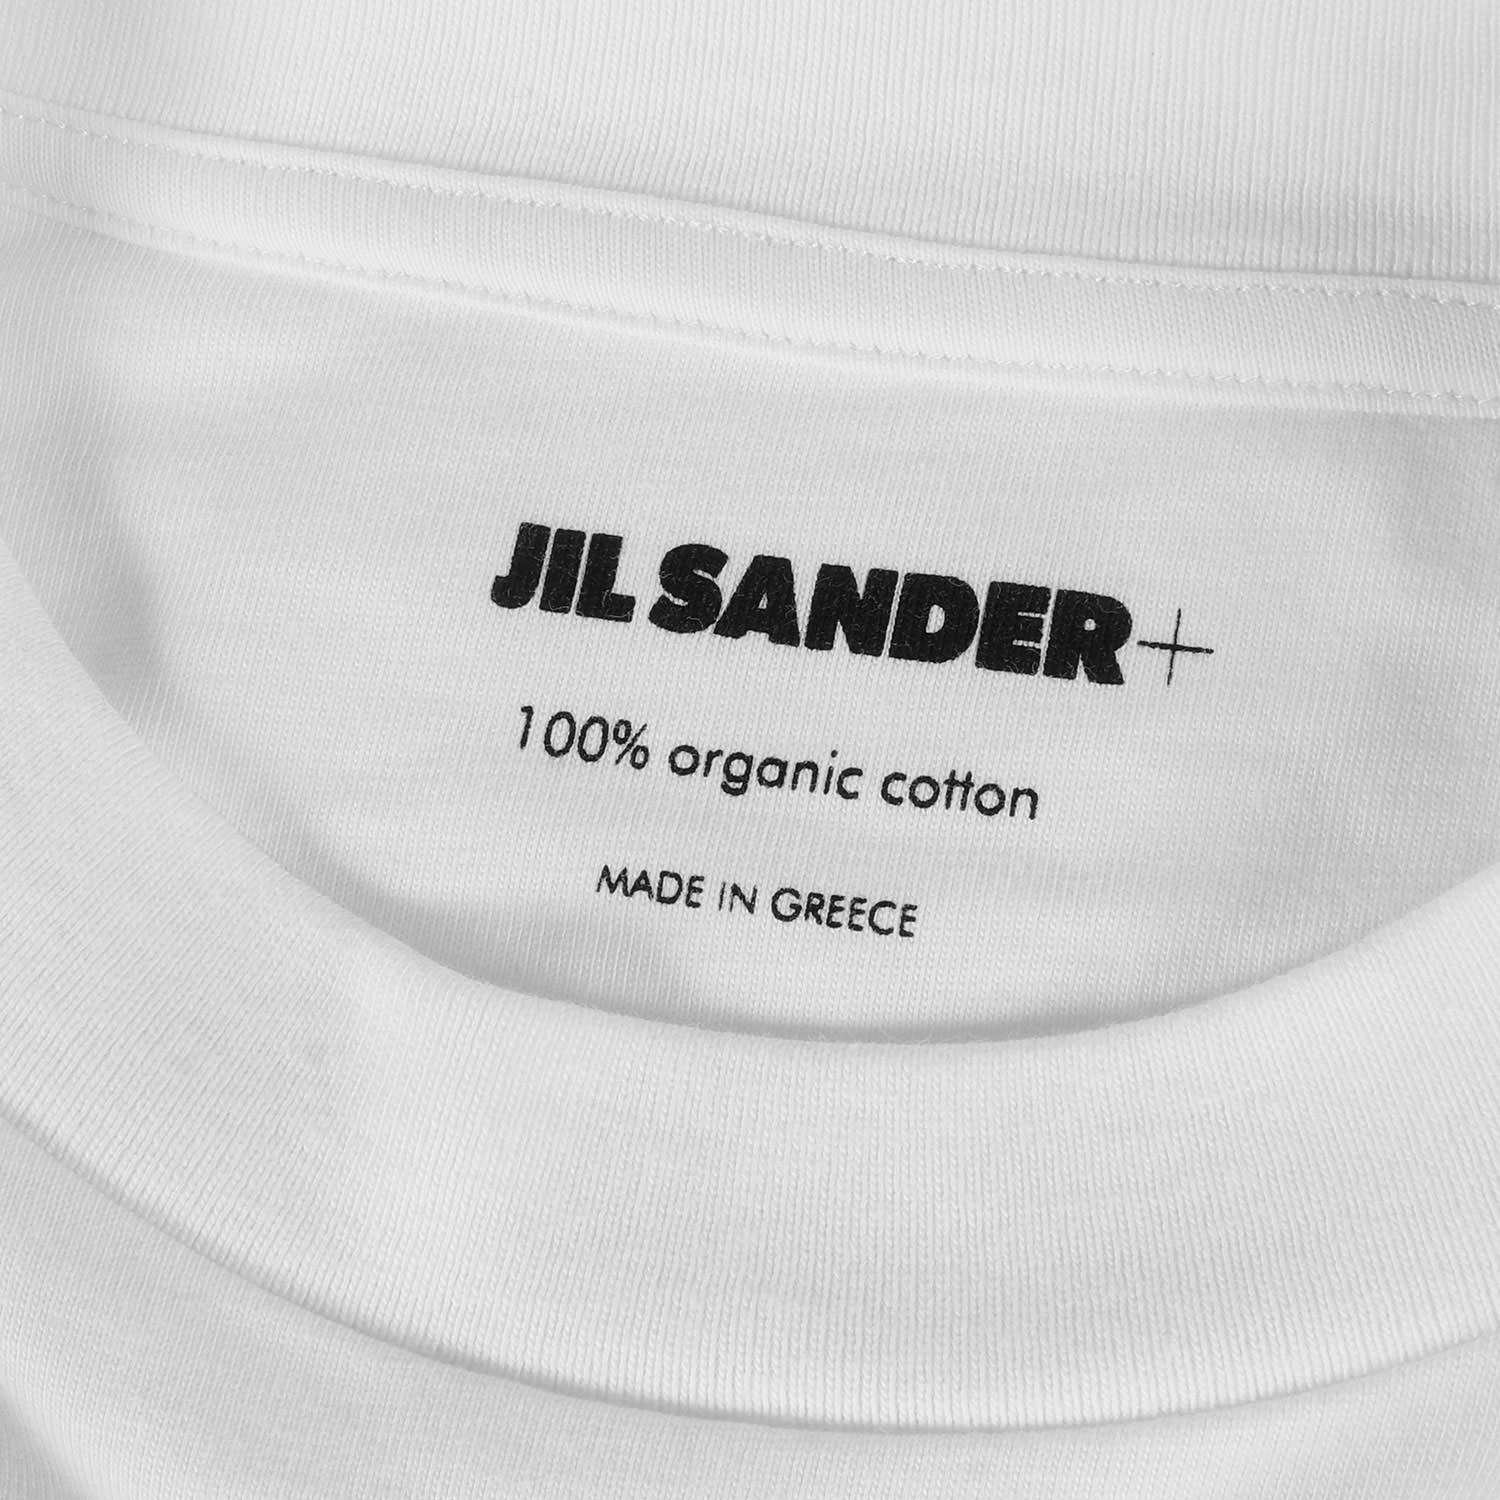 JIL SANDER ジル・サンダー Tシャツ サイズ:S 裾 ロゴ パッチ プレーン ...